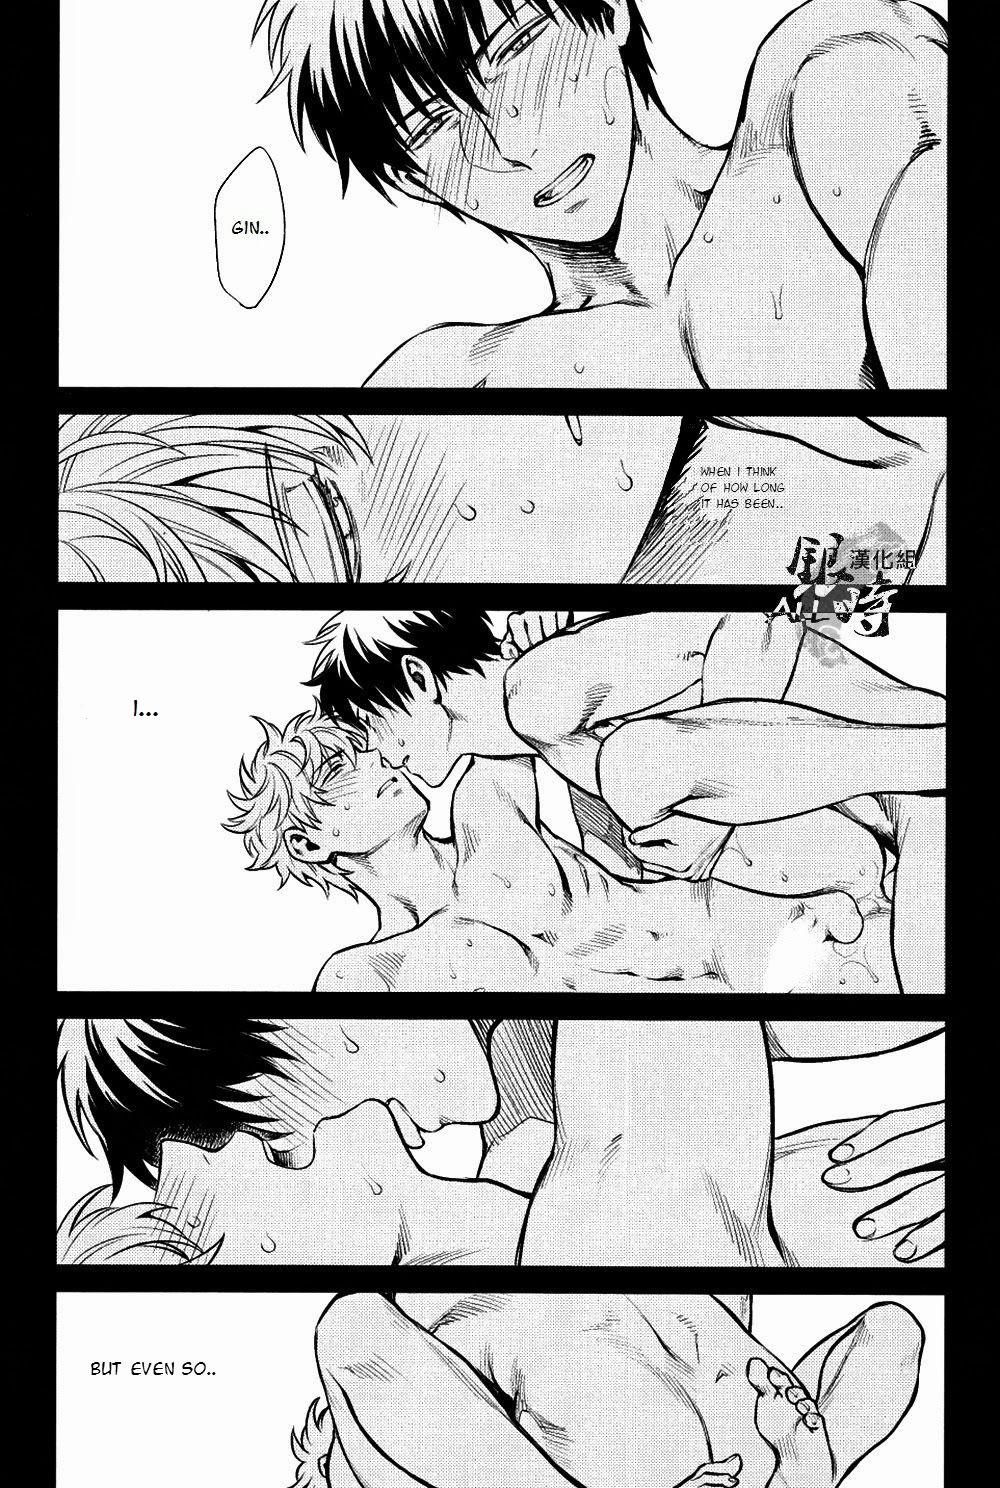 Anal Licking Please! Gintoki - Gintama Nudes - Page 3